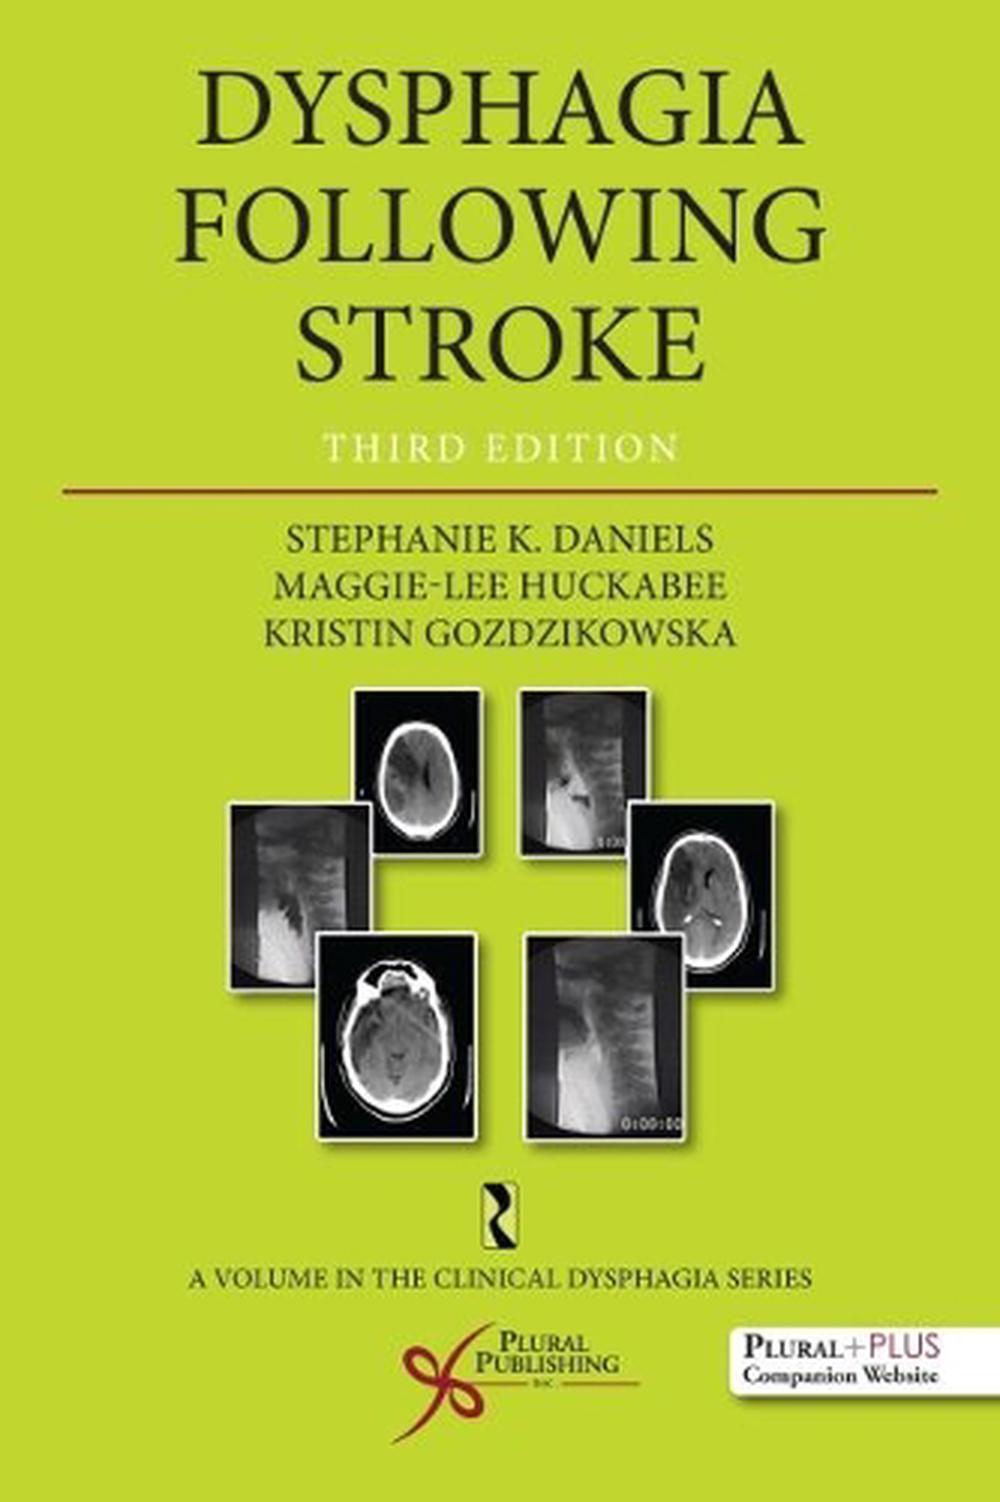 Dysphagia Following Stroke by Stephanie K. Daniels (English) Paperback Book